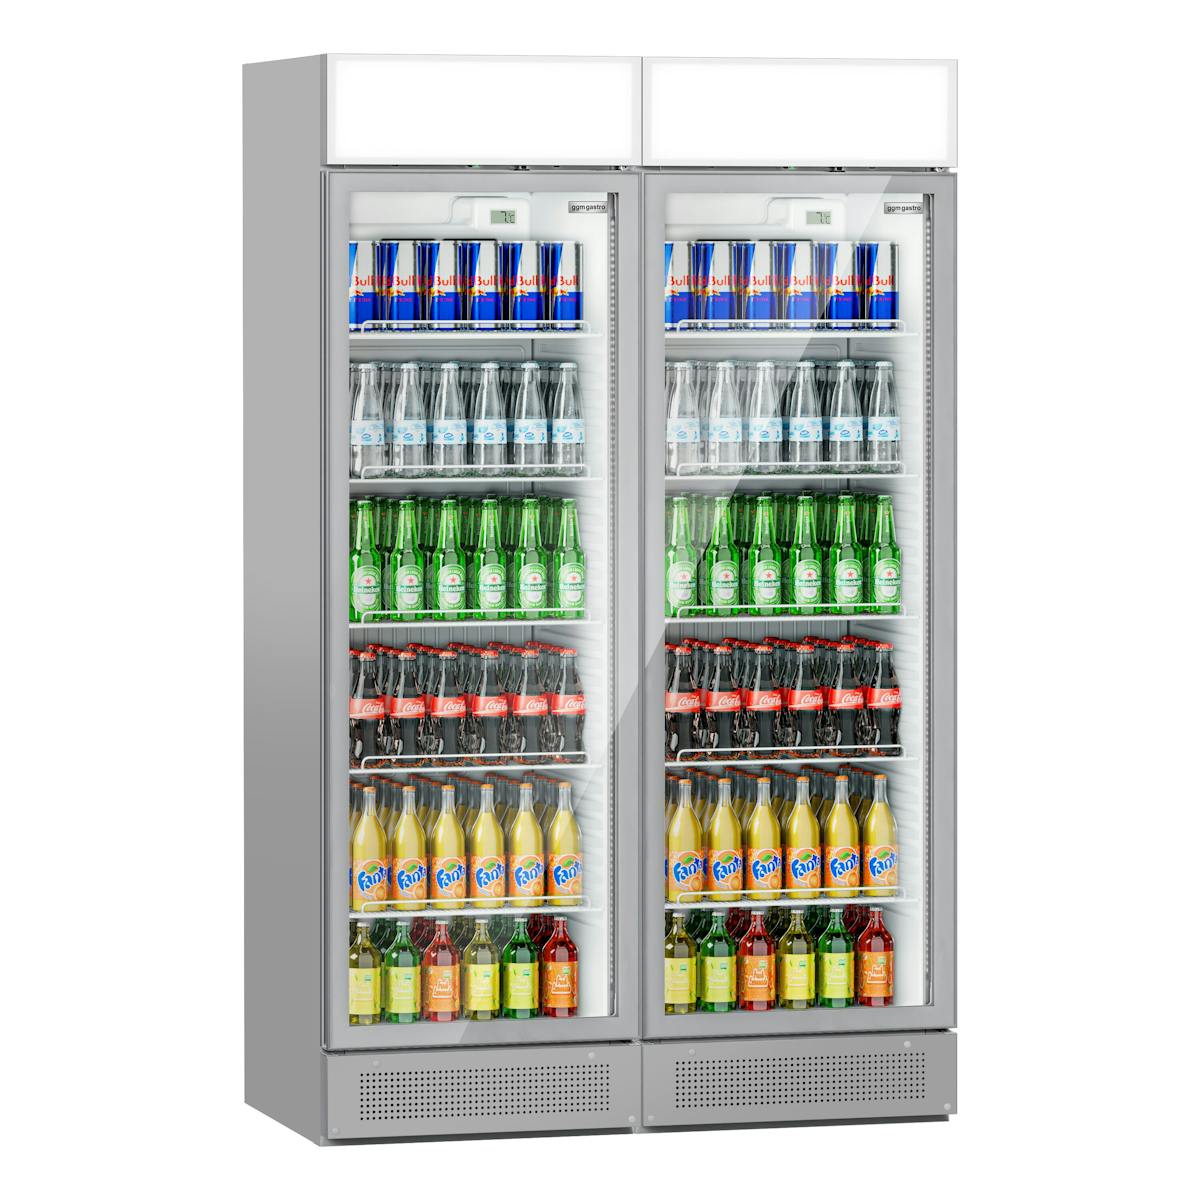 (2 units) Beverage refrigerator - 690 litres - frameless design - with advertising display